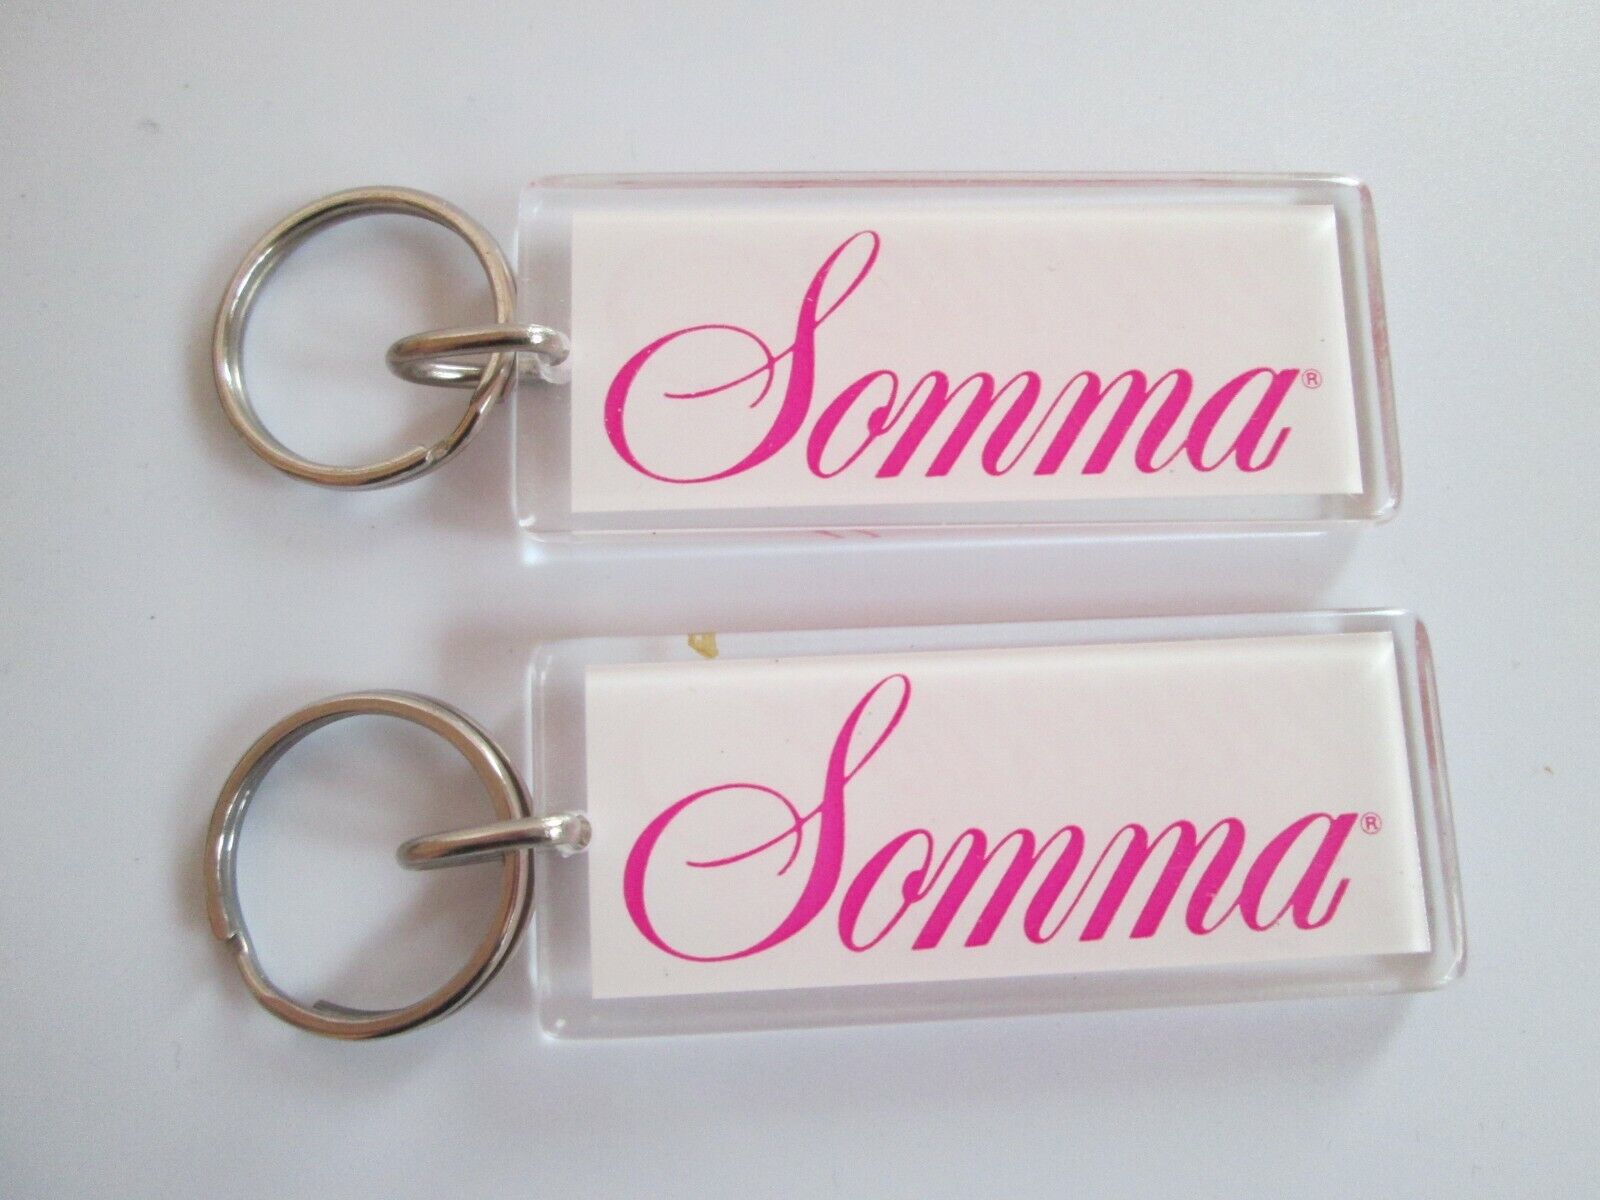 Lot 2 Somma Souvenir Keychain Vintage Double Sided Pink White Cursive 